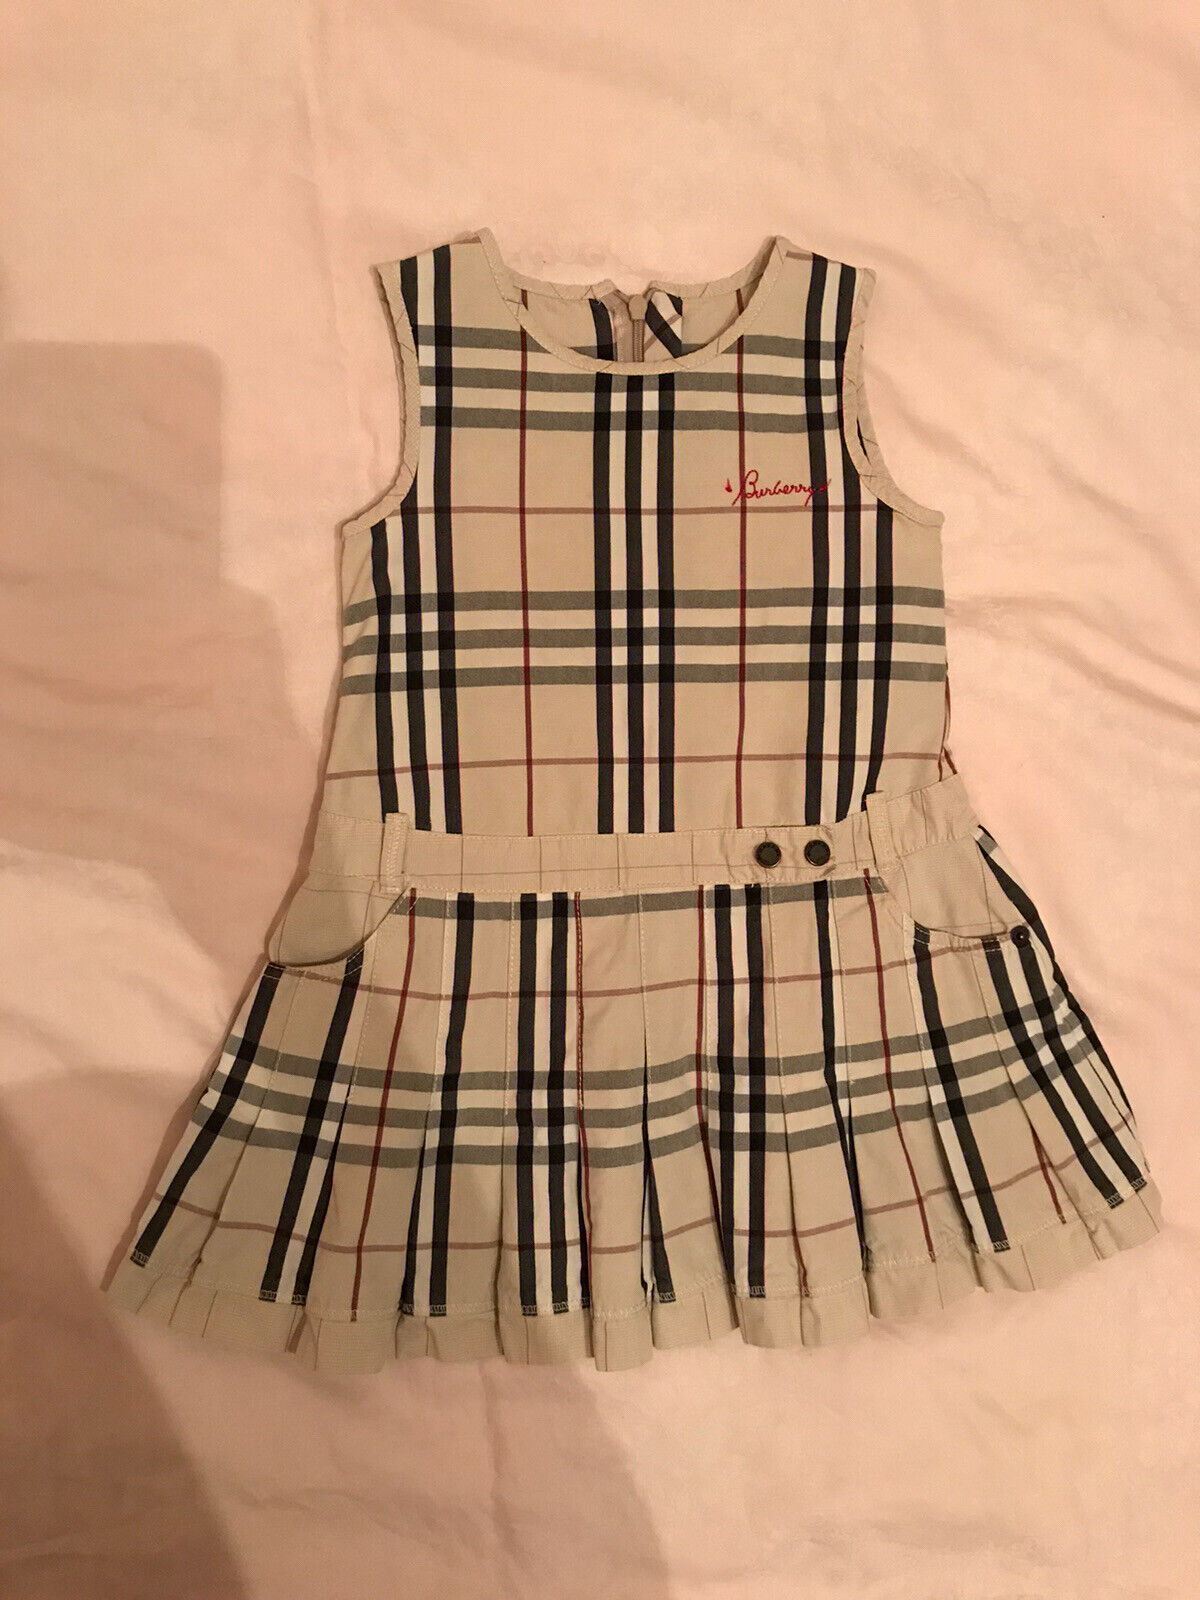 Burberry Nova Check Plaid Kids Girls dress size 2 years | eBay